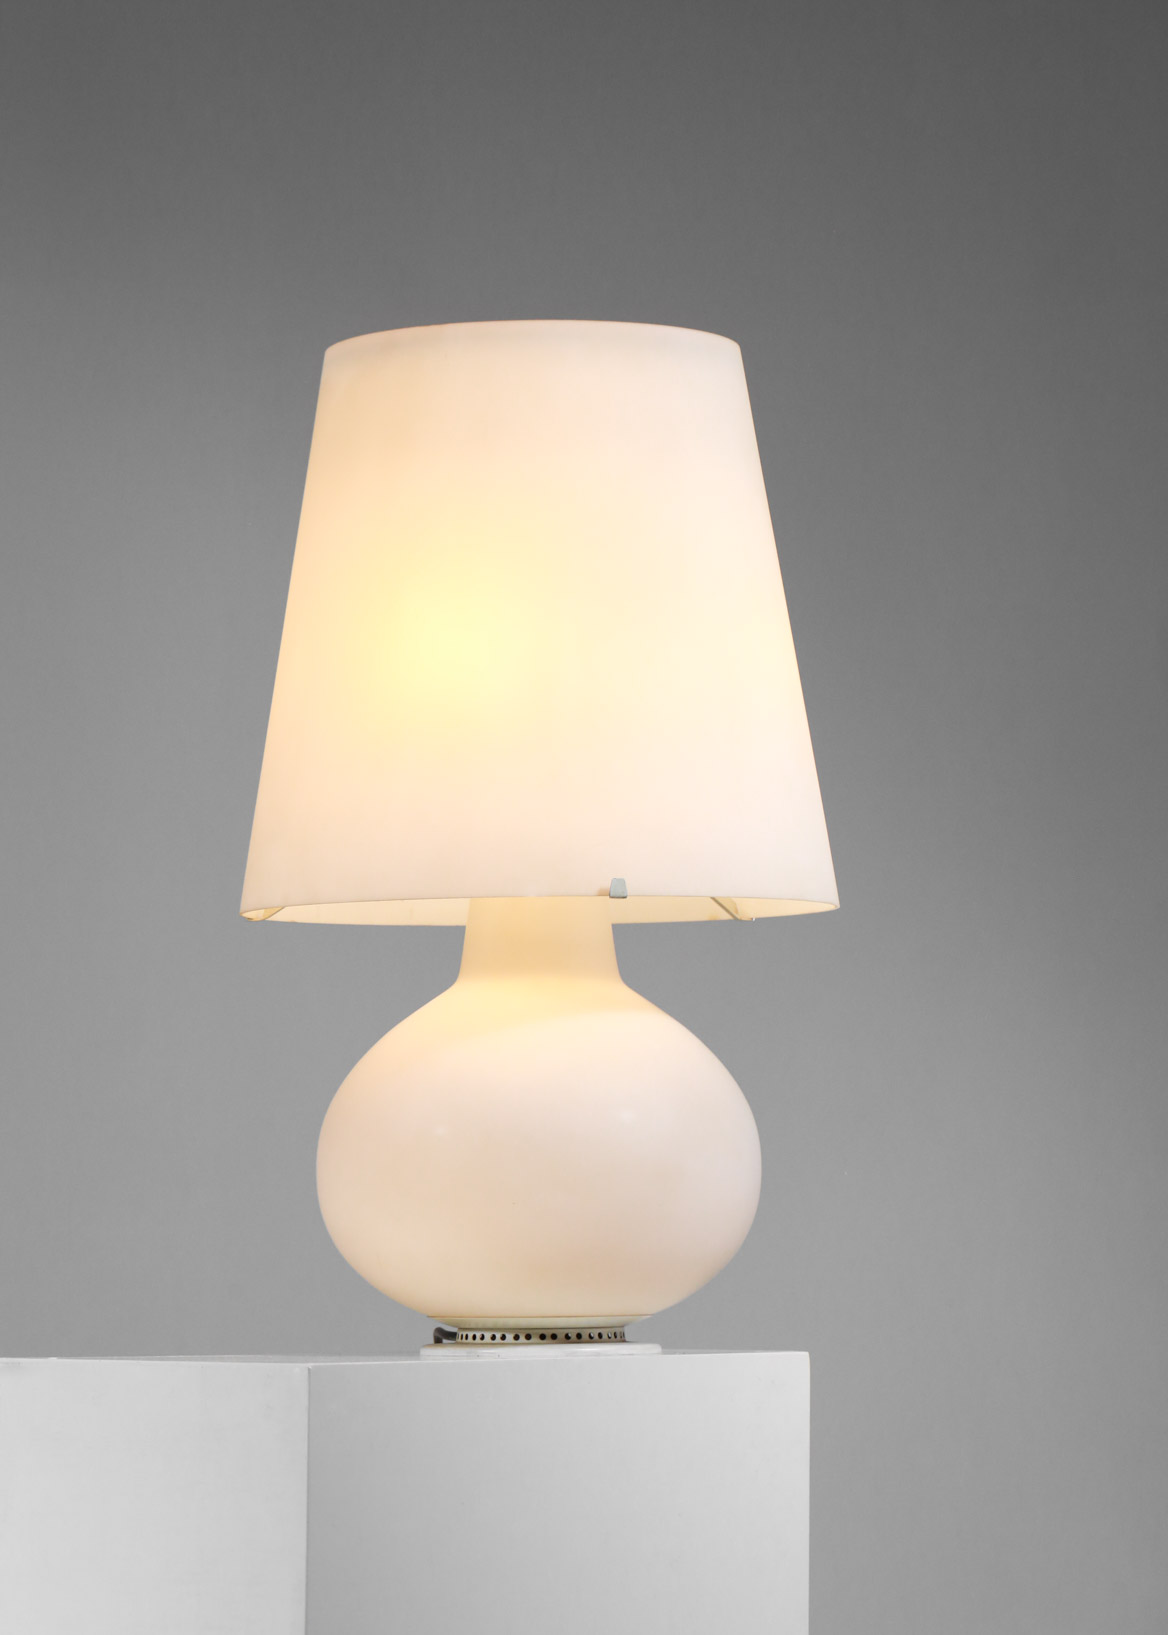 Donder vertrouwen Detective Large Fontana Arte lamp by Max Ingrand – E408 – Danke Galerie